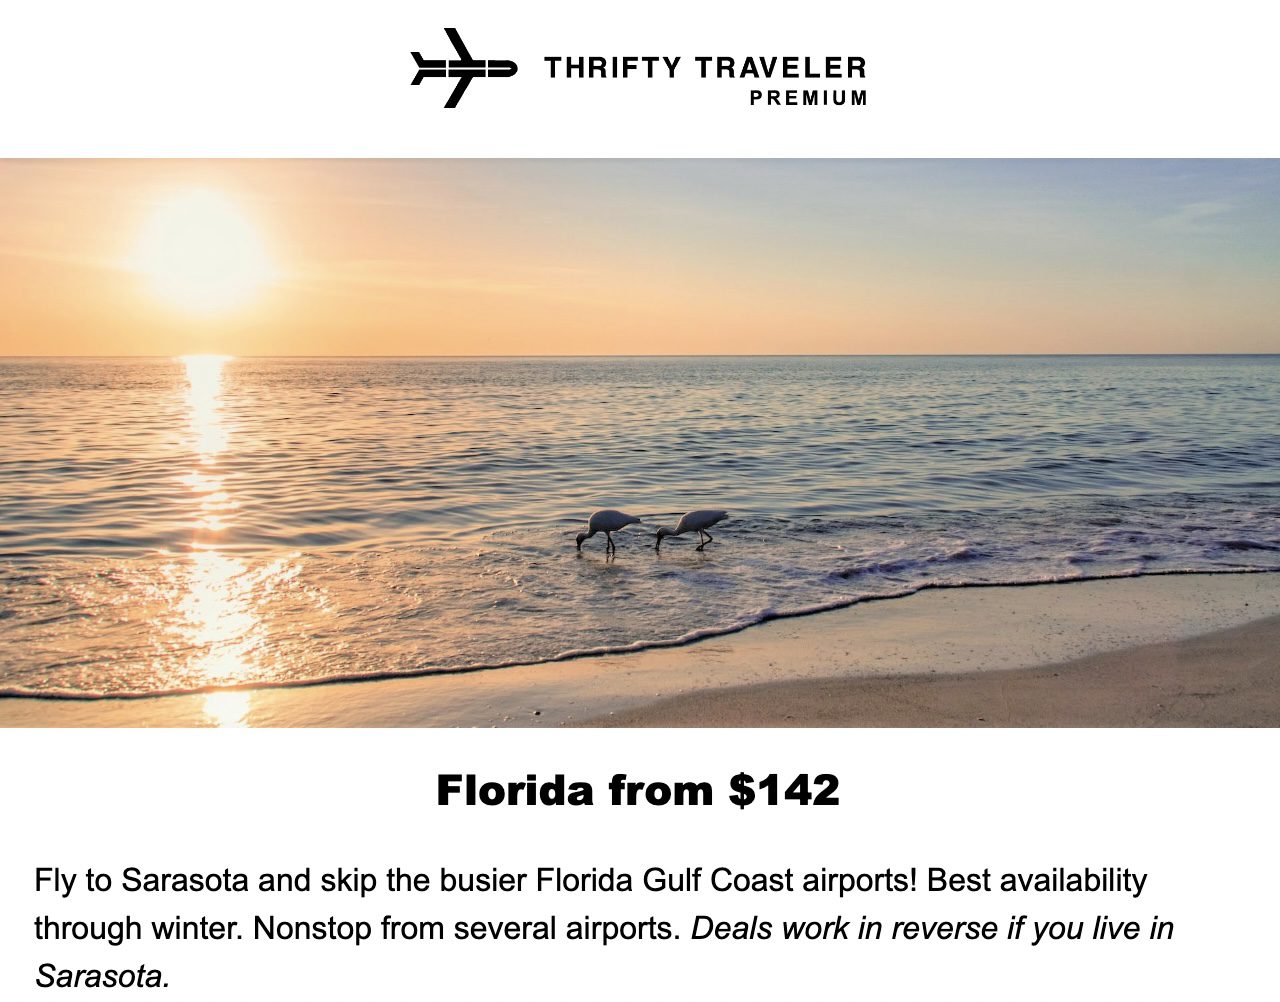 Cheap flights to Florida